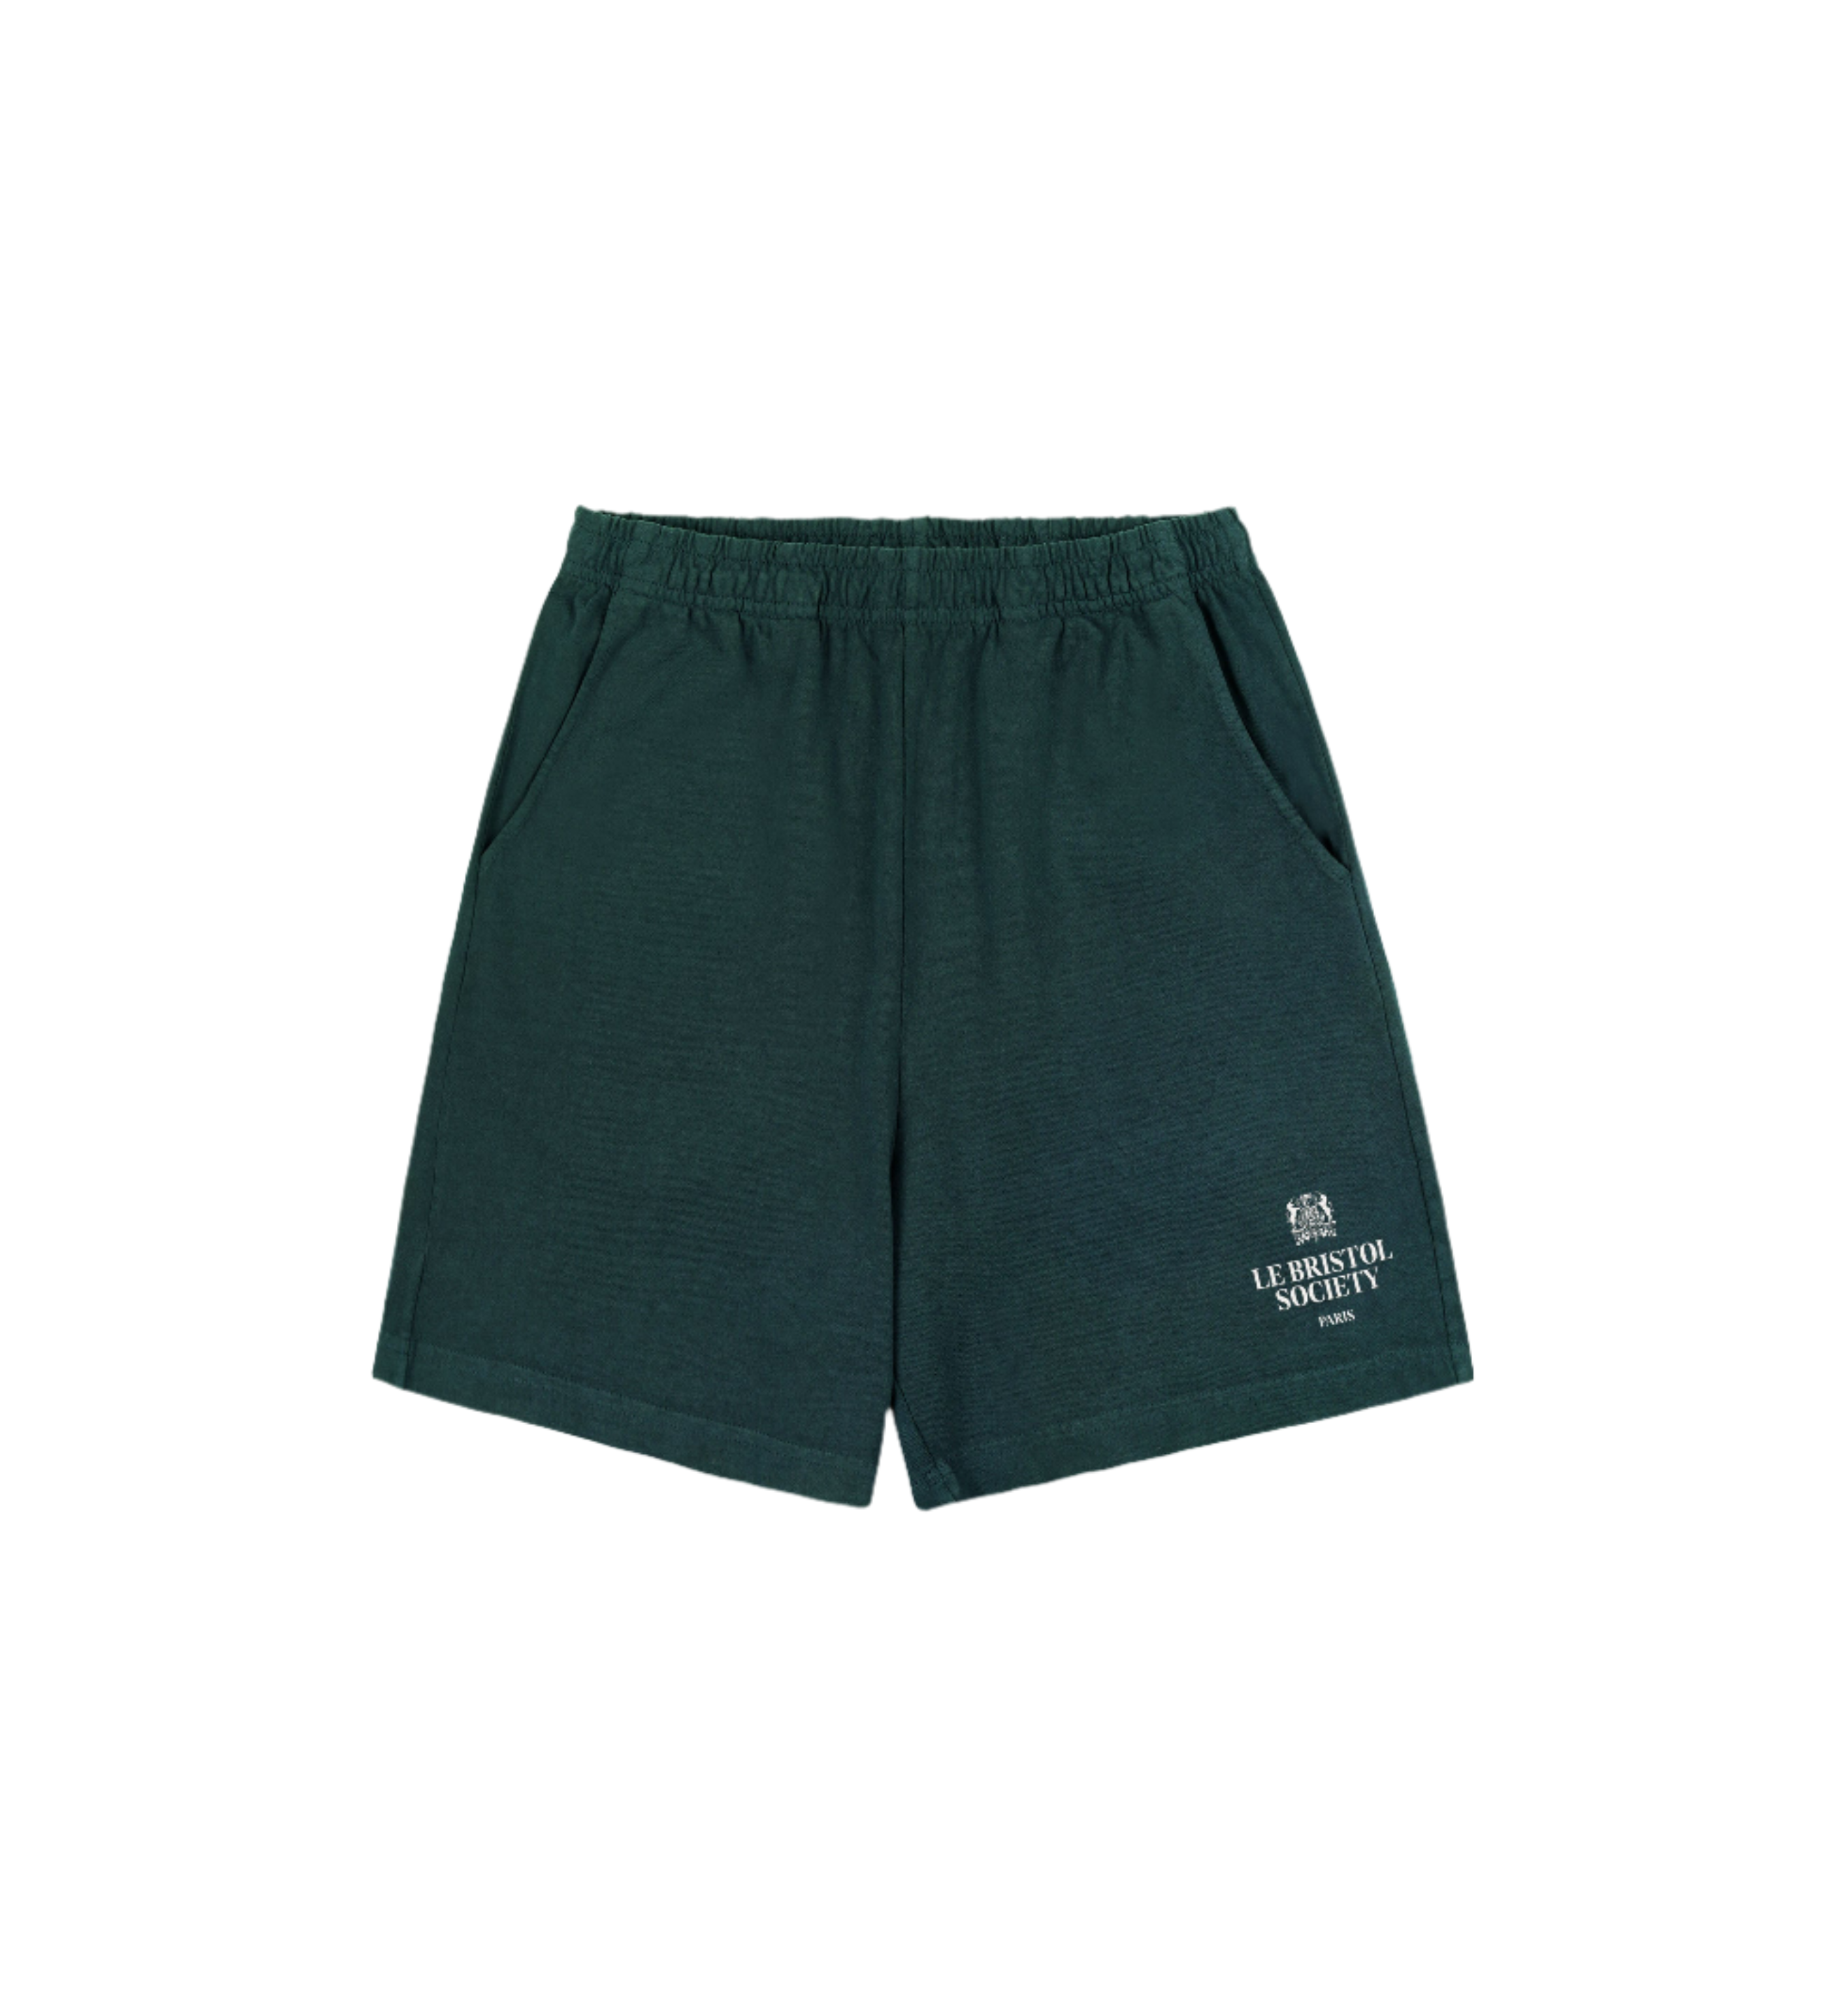 Le Bristol Society Brand Block Gym Shorts